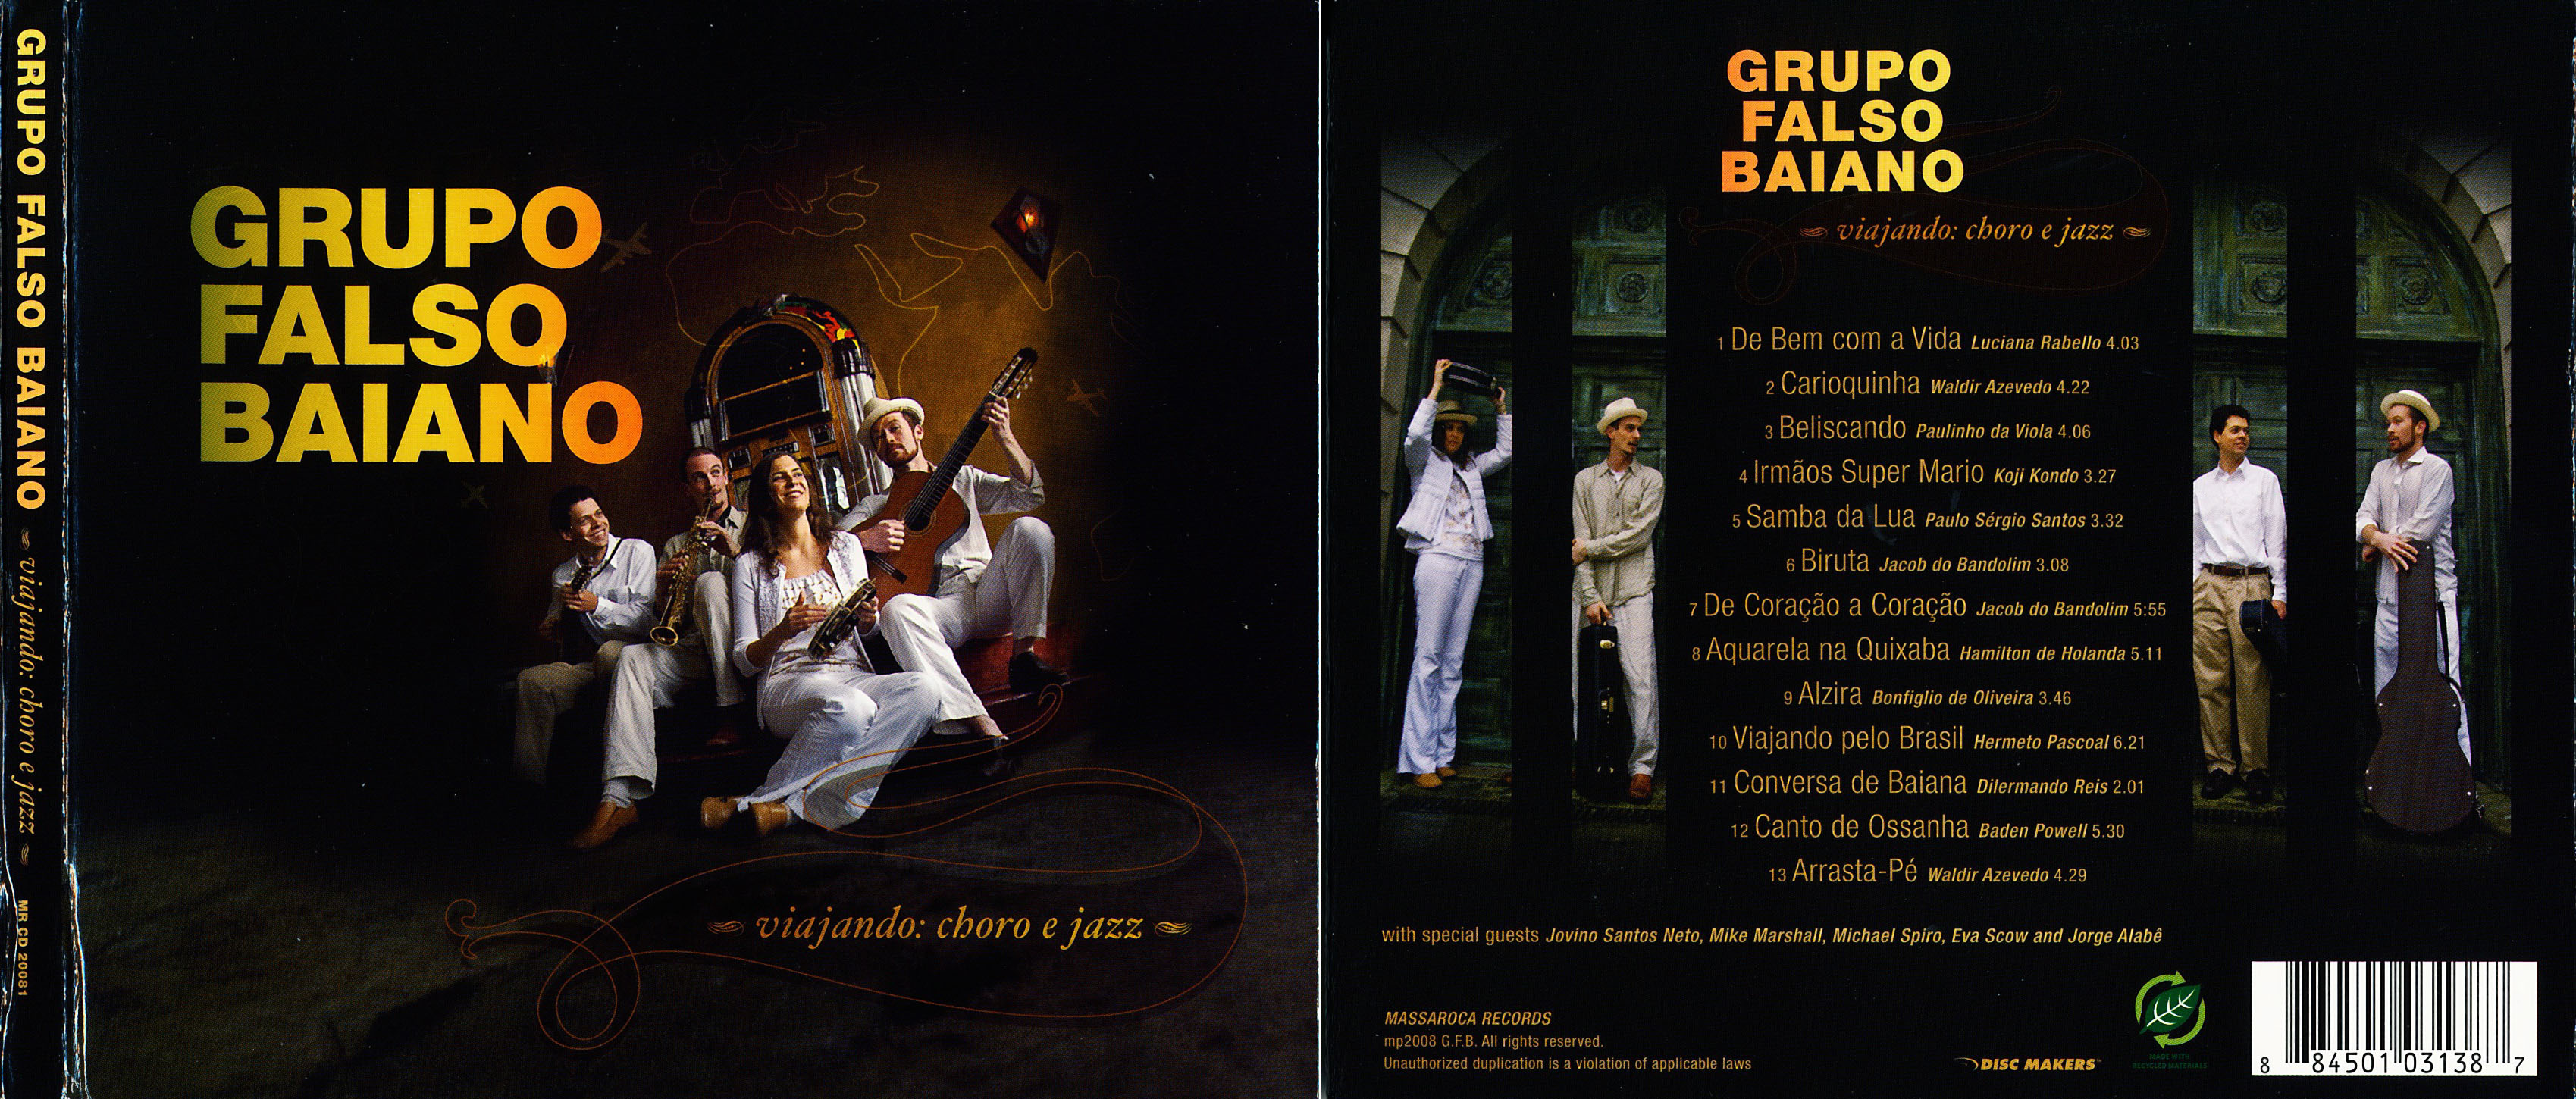 Grupo Falso Baiano | Viajando Choro e Jazz